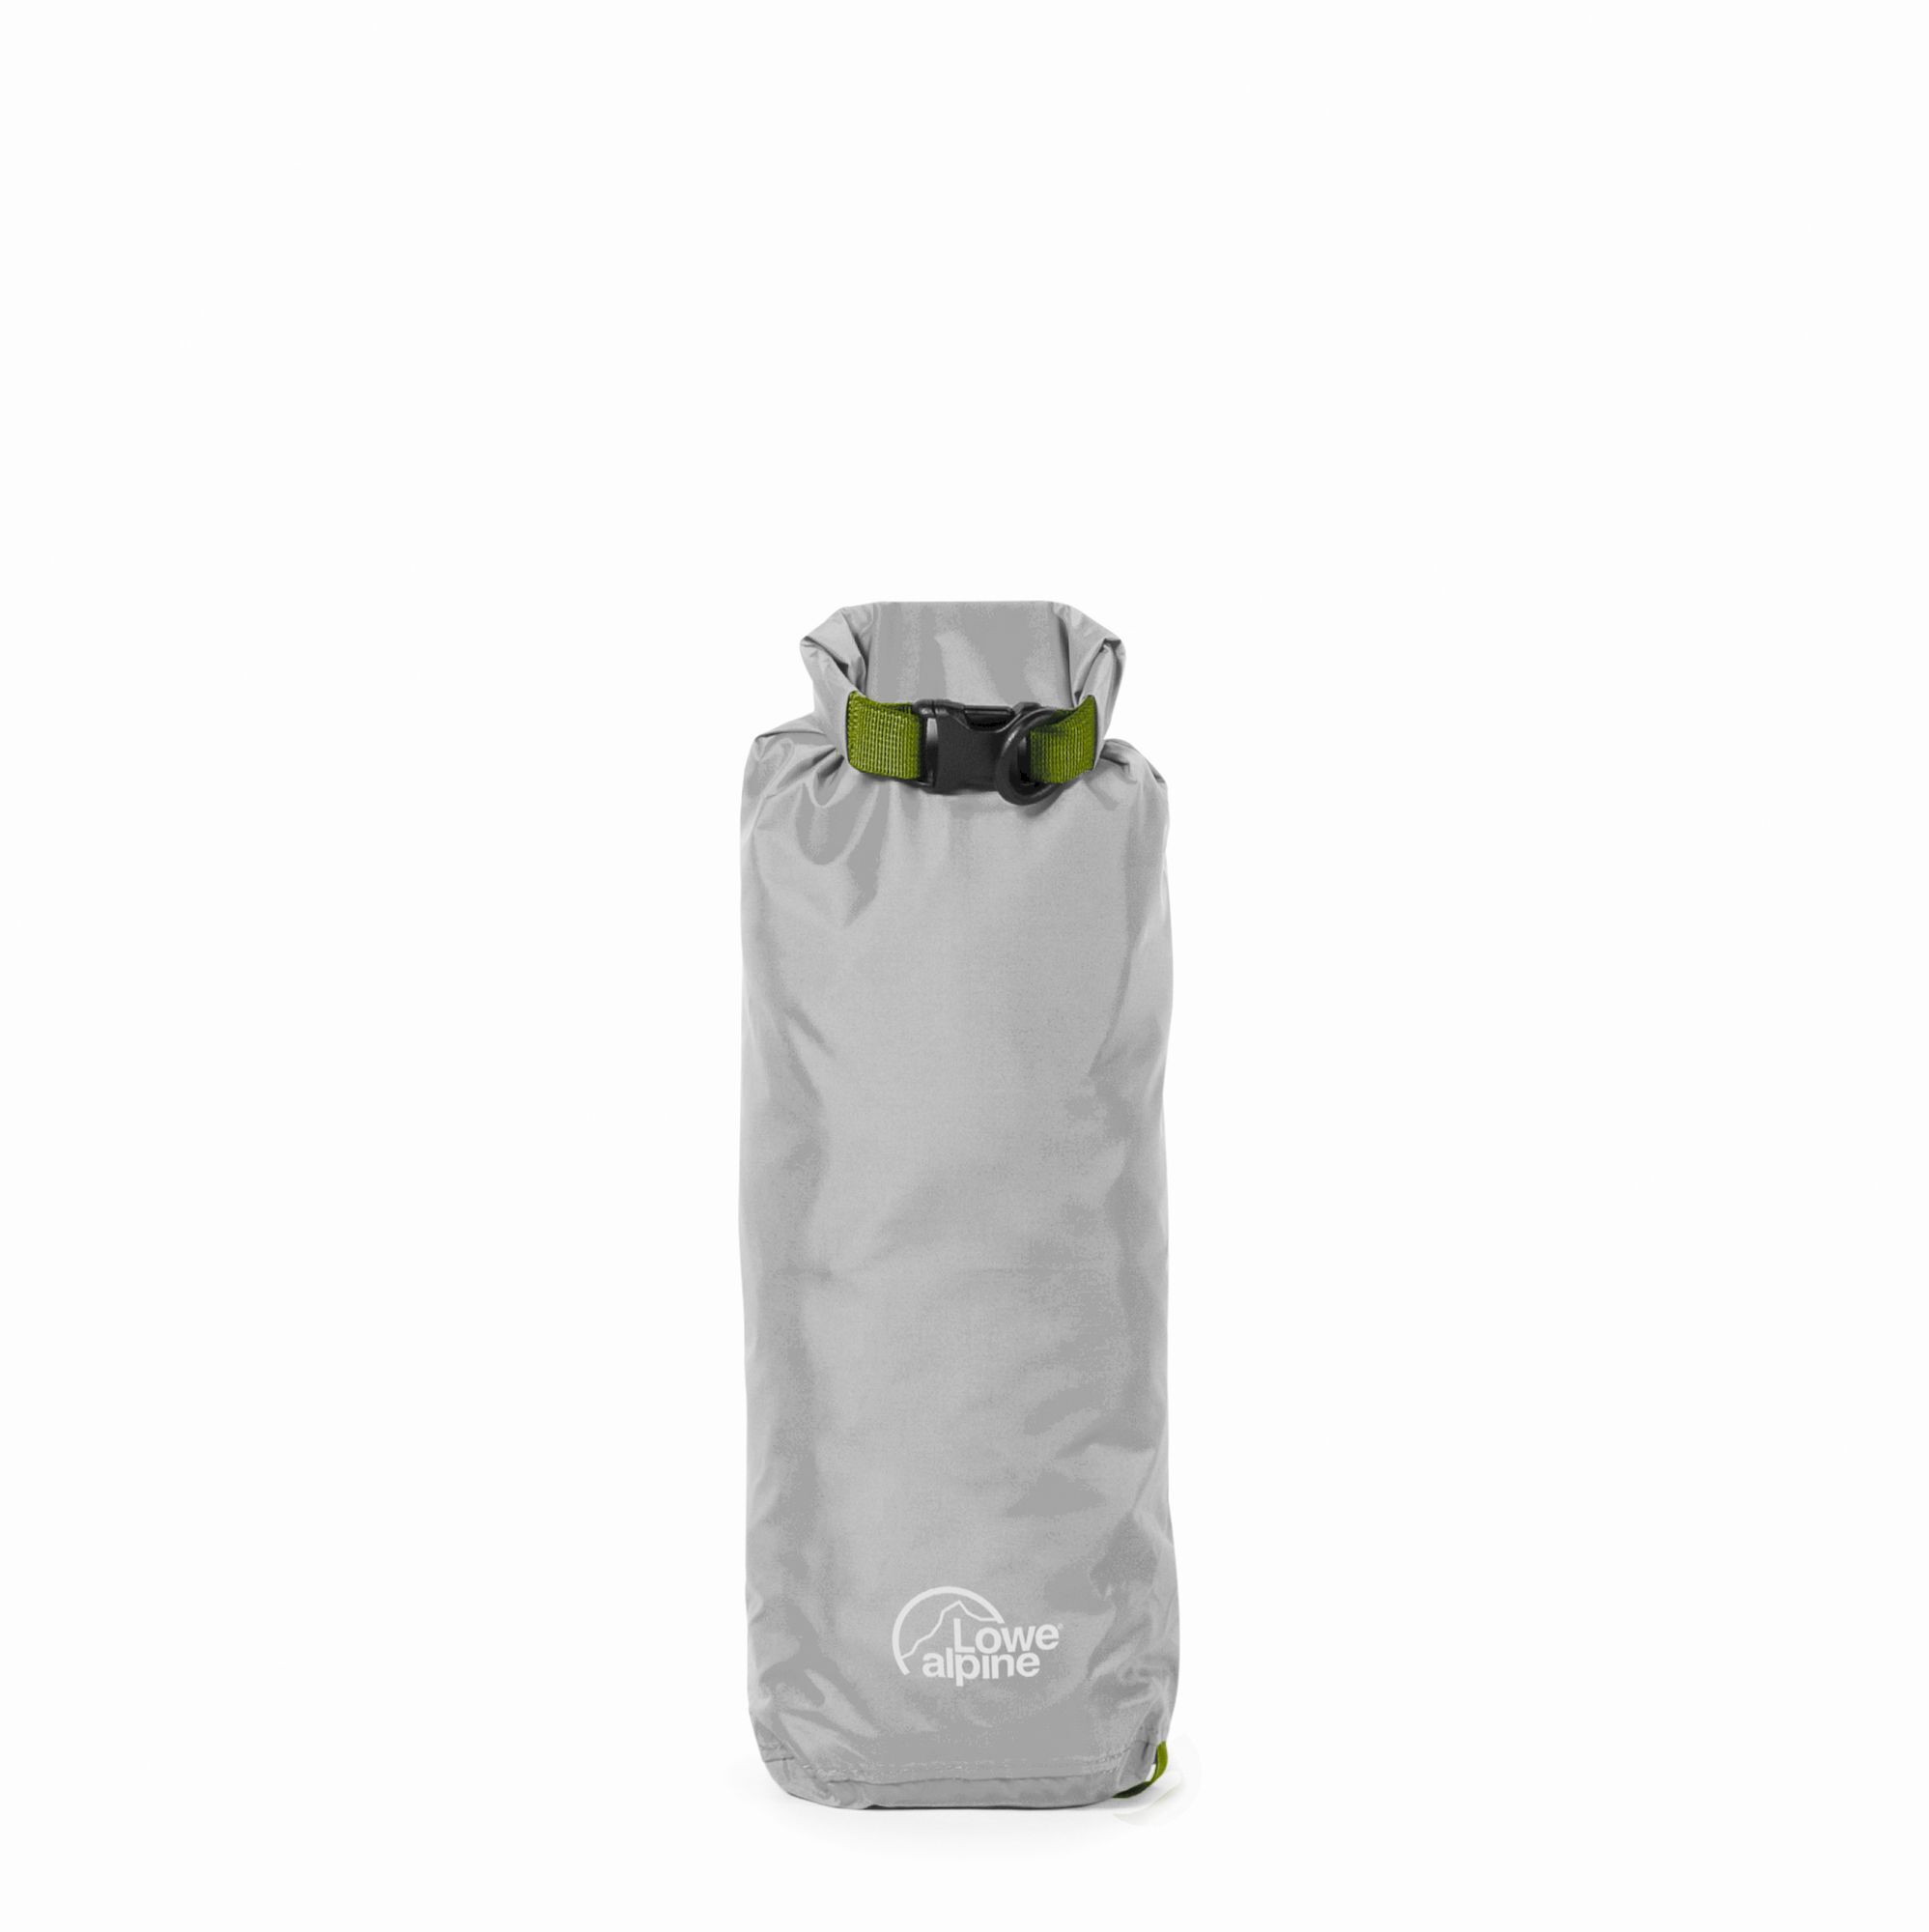 Lowe Alpine Ultralite Drysack - Vandtæt taske | Hardloop